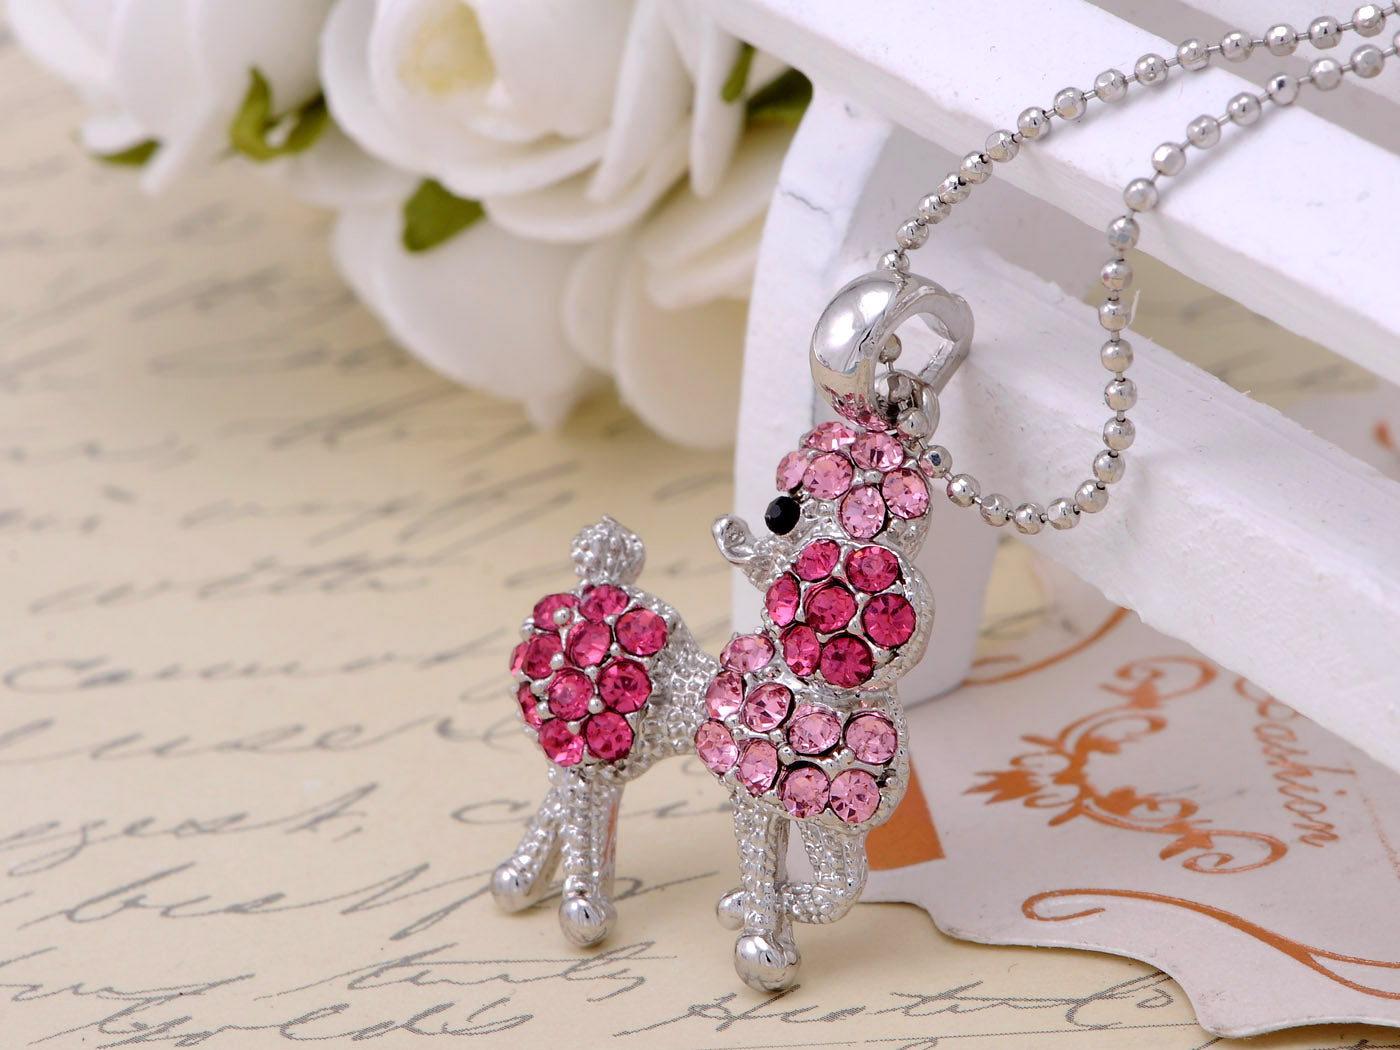 Light Peach Gemss Poodle Dog Pendant Necklace